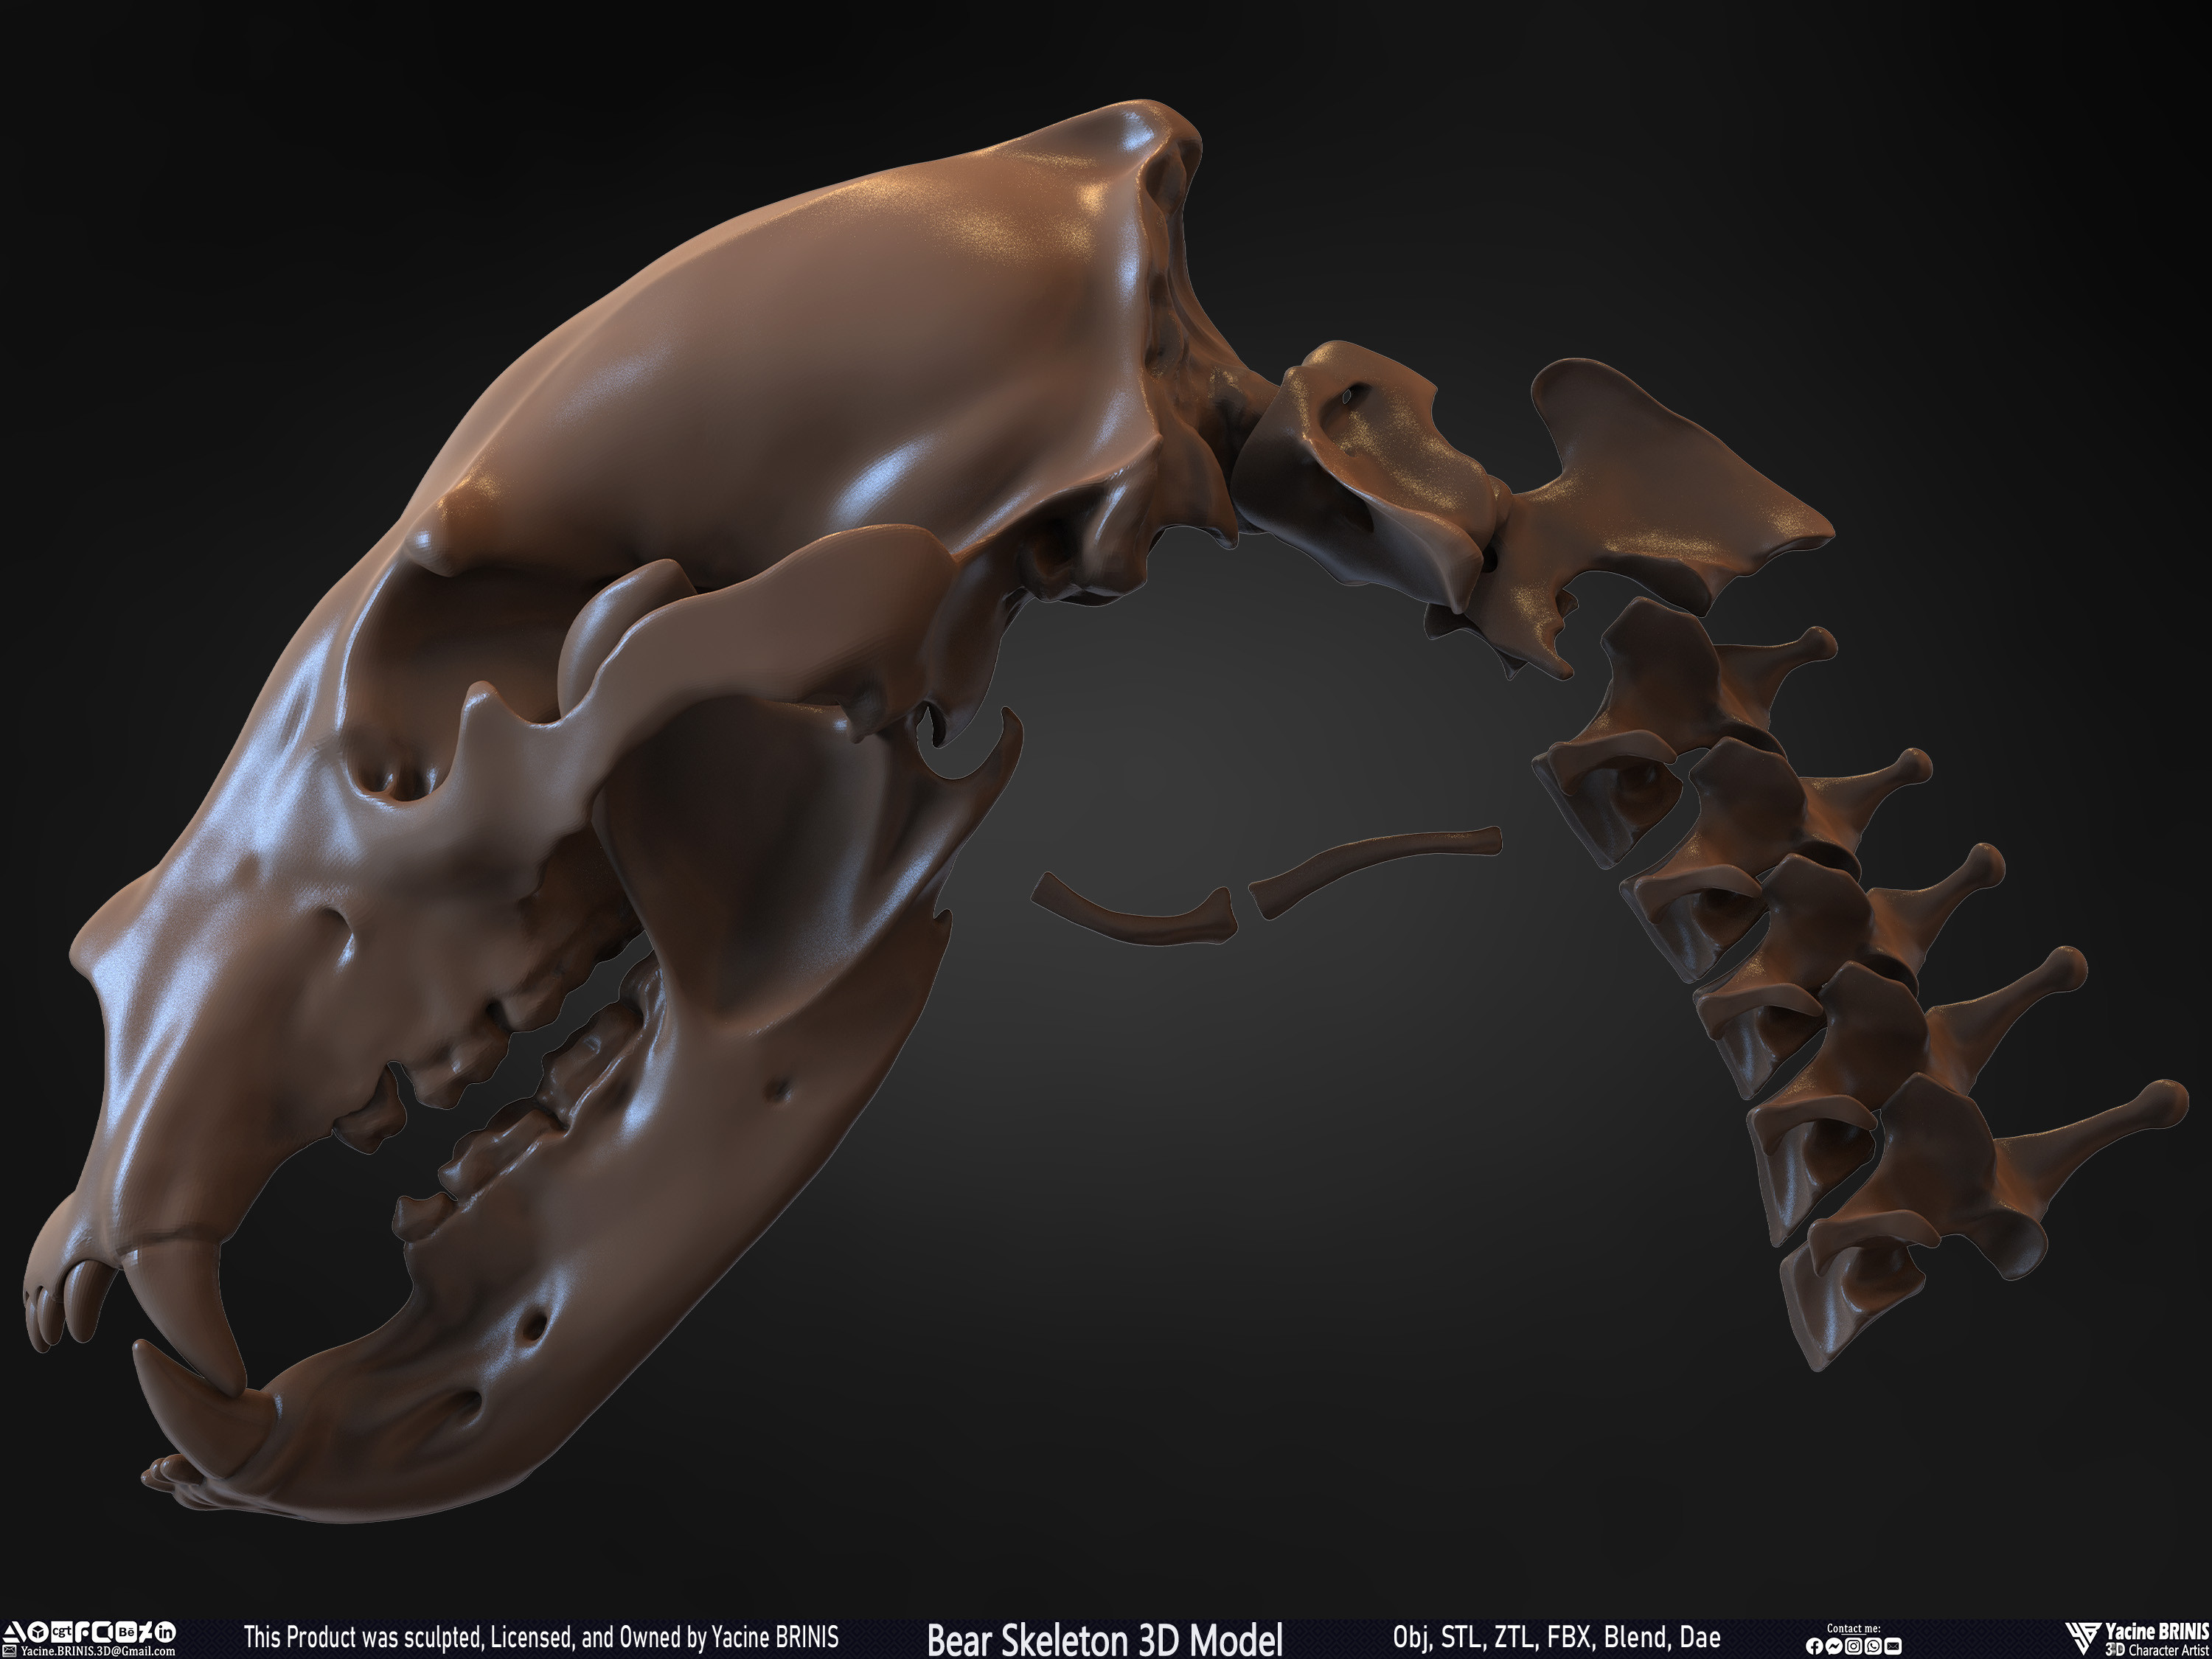 Bear Skeleton 3D Model Sculpted by Yacine BRINIS Set 034